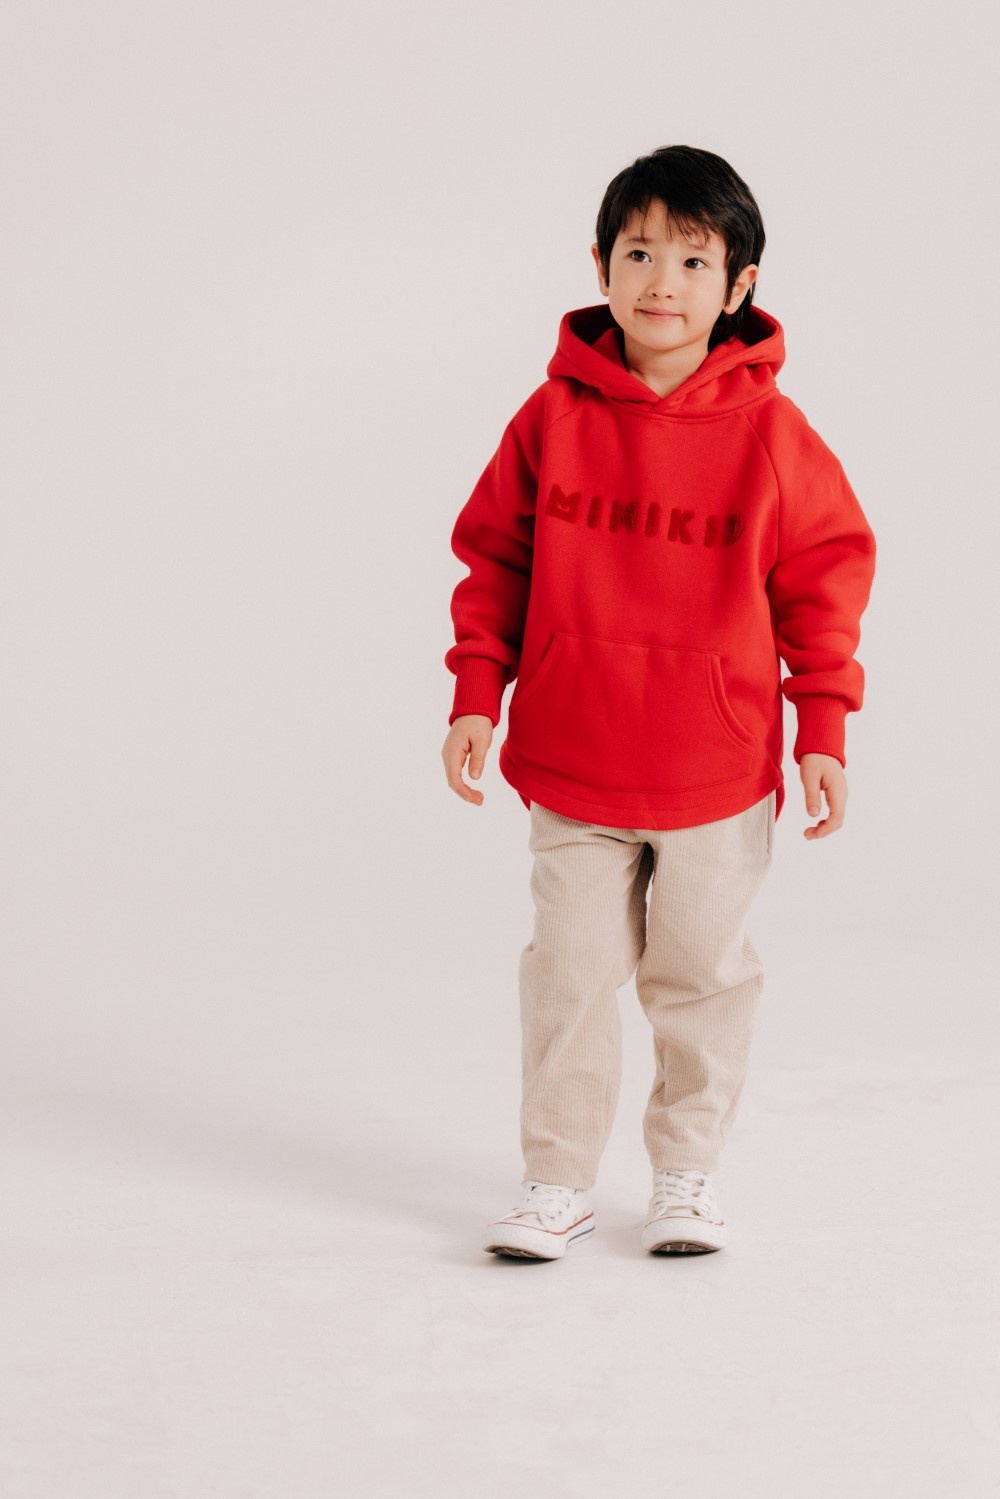 Minikid RED HOODIE | HOODED SWEATER | COOL KIDS CLOTHING